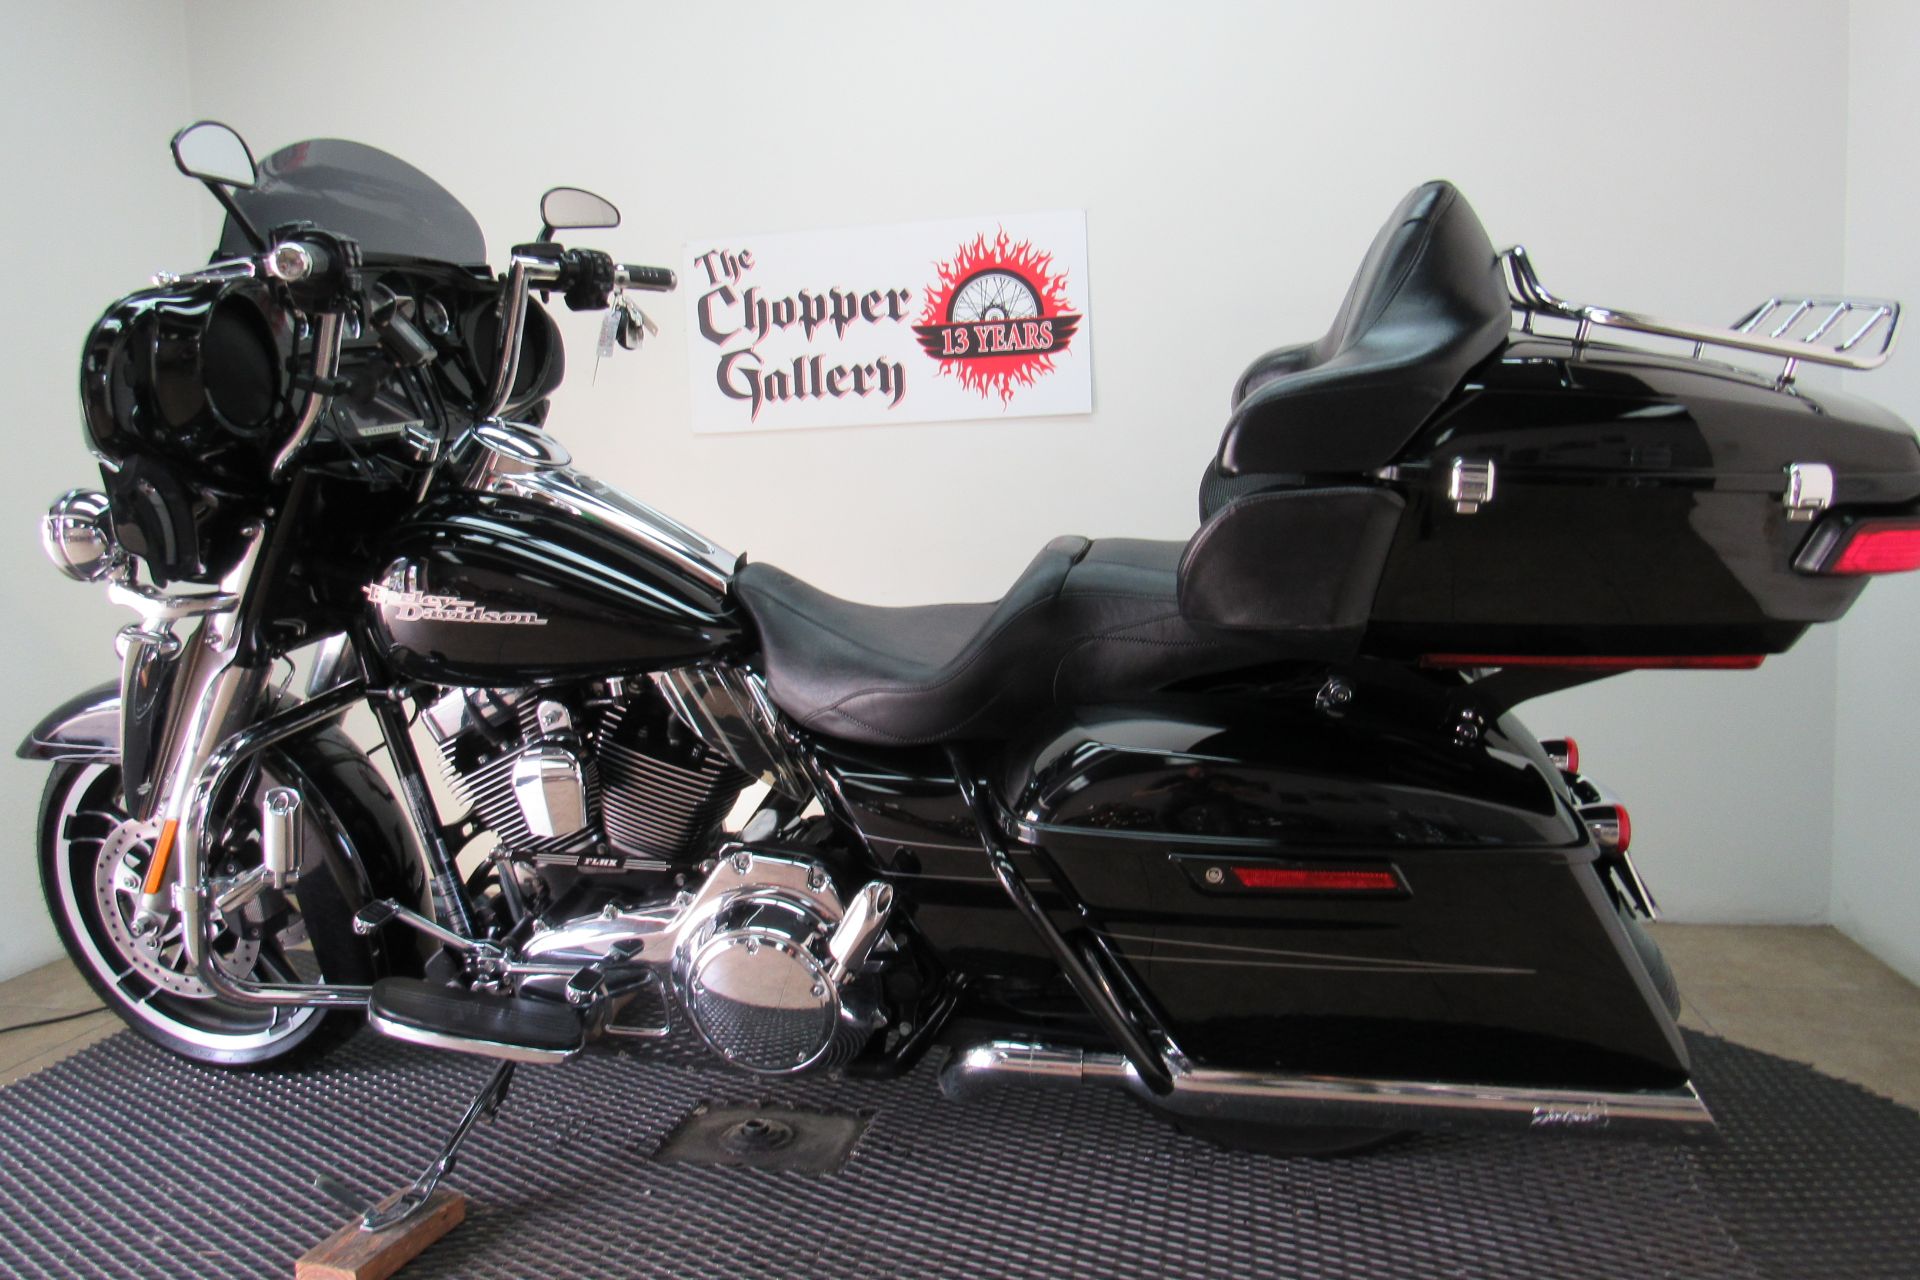 2014 Harley-Davidson Street Glide® Special in Temecula, California - Photo 6